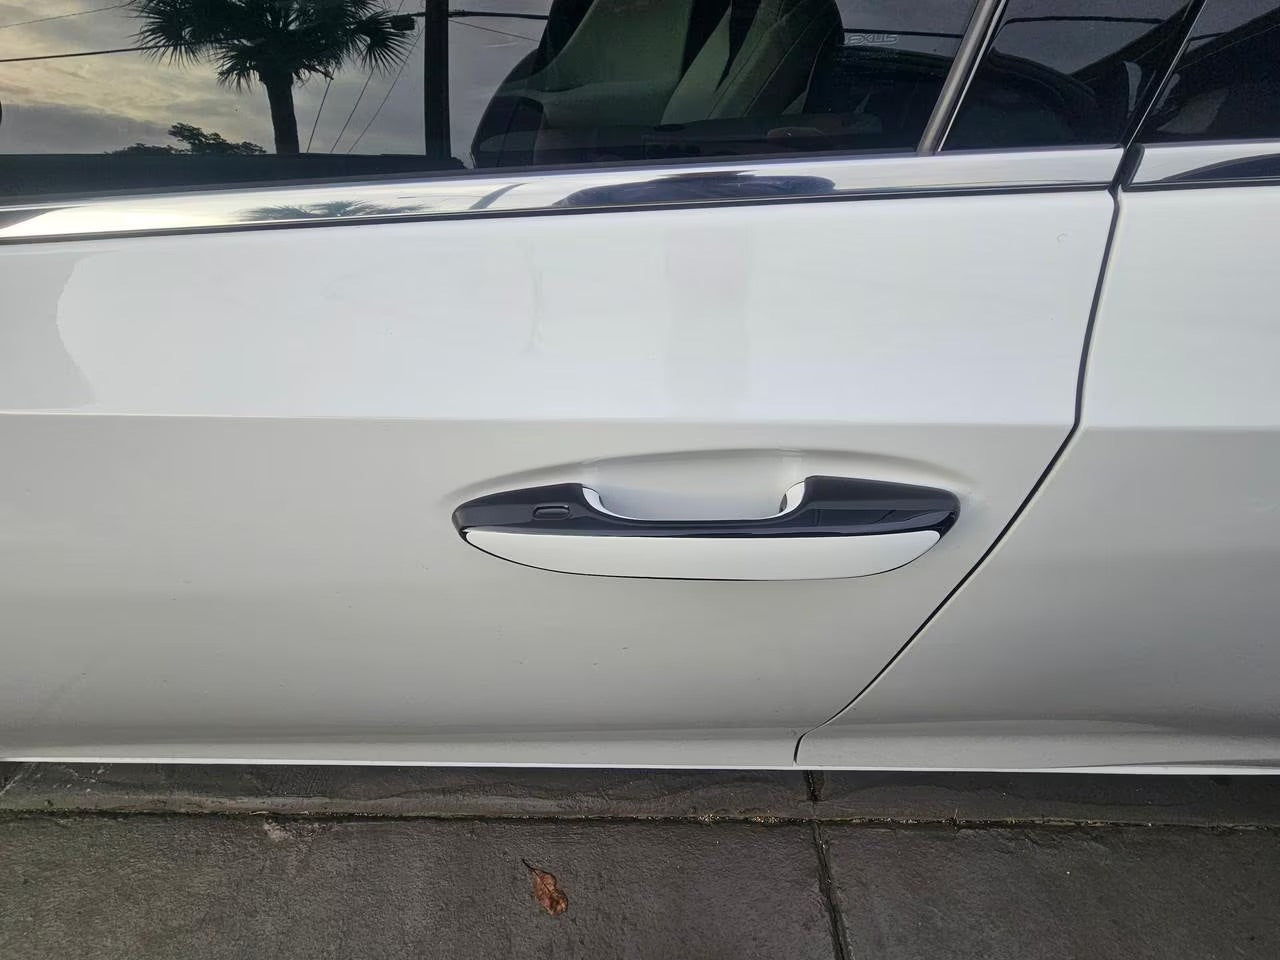 Custom Door Handle Overlays / Covers For 2019 - 2024 Lexus UX250h (Chrome Base)